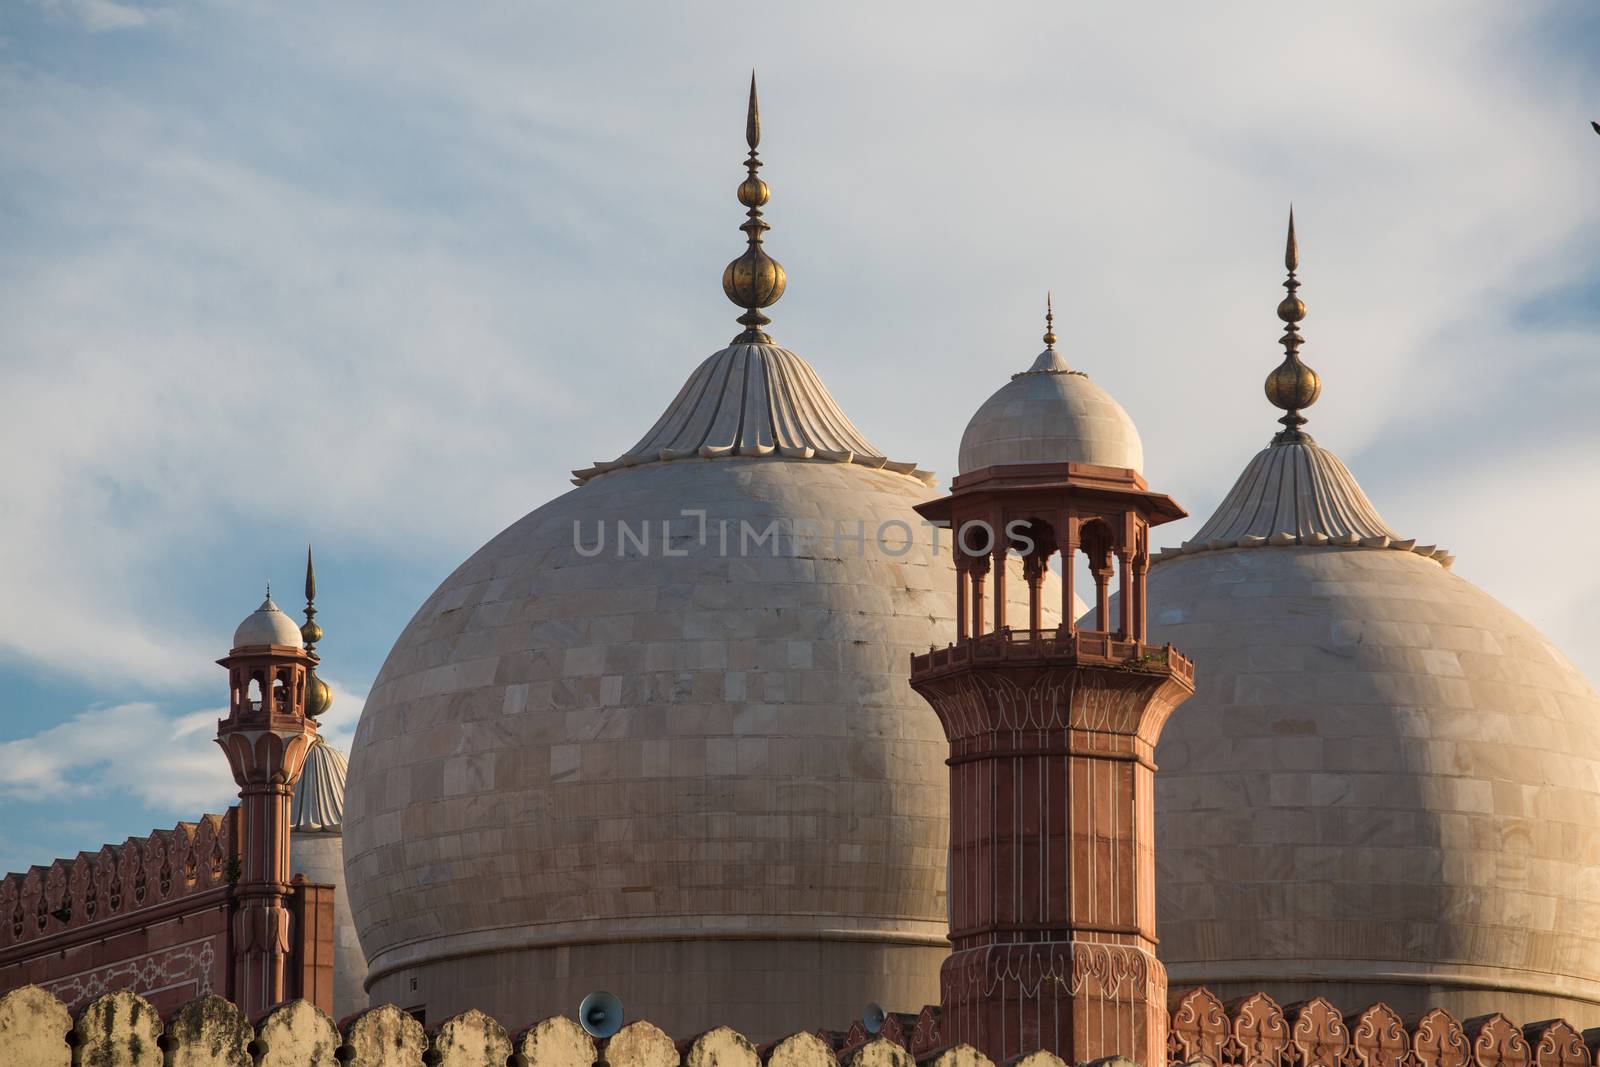 The Emperor's Mosque - Badshahi Masjid in Lahore, Pakistan Dome with Minarets Closeup